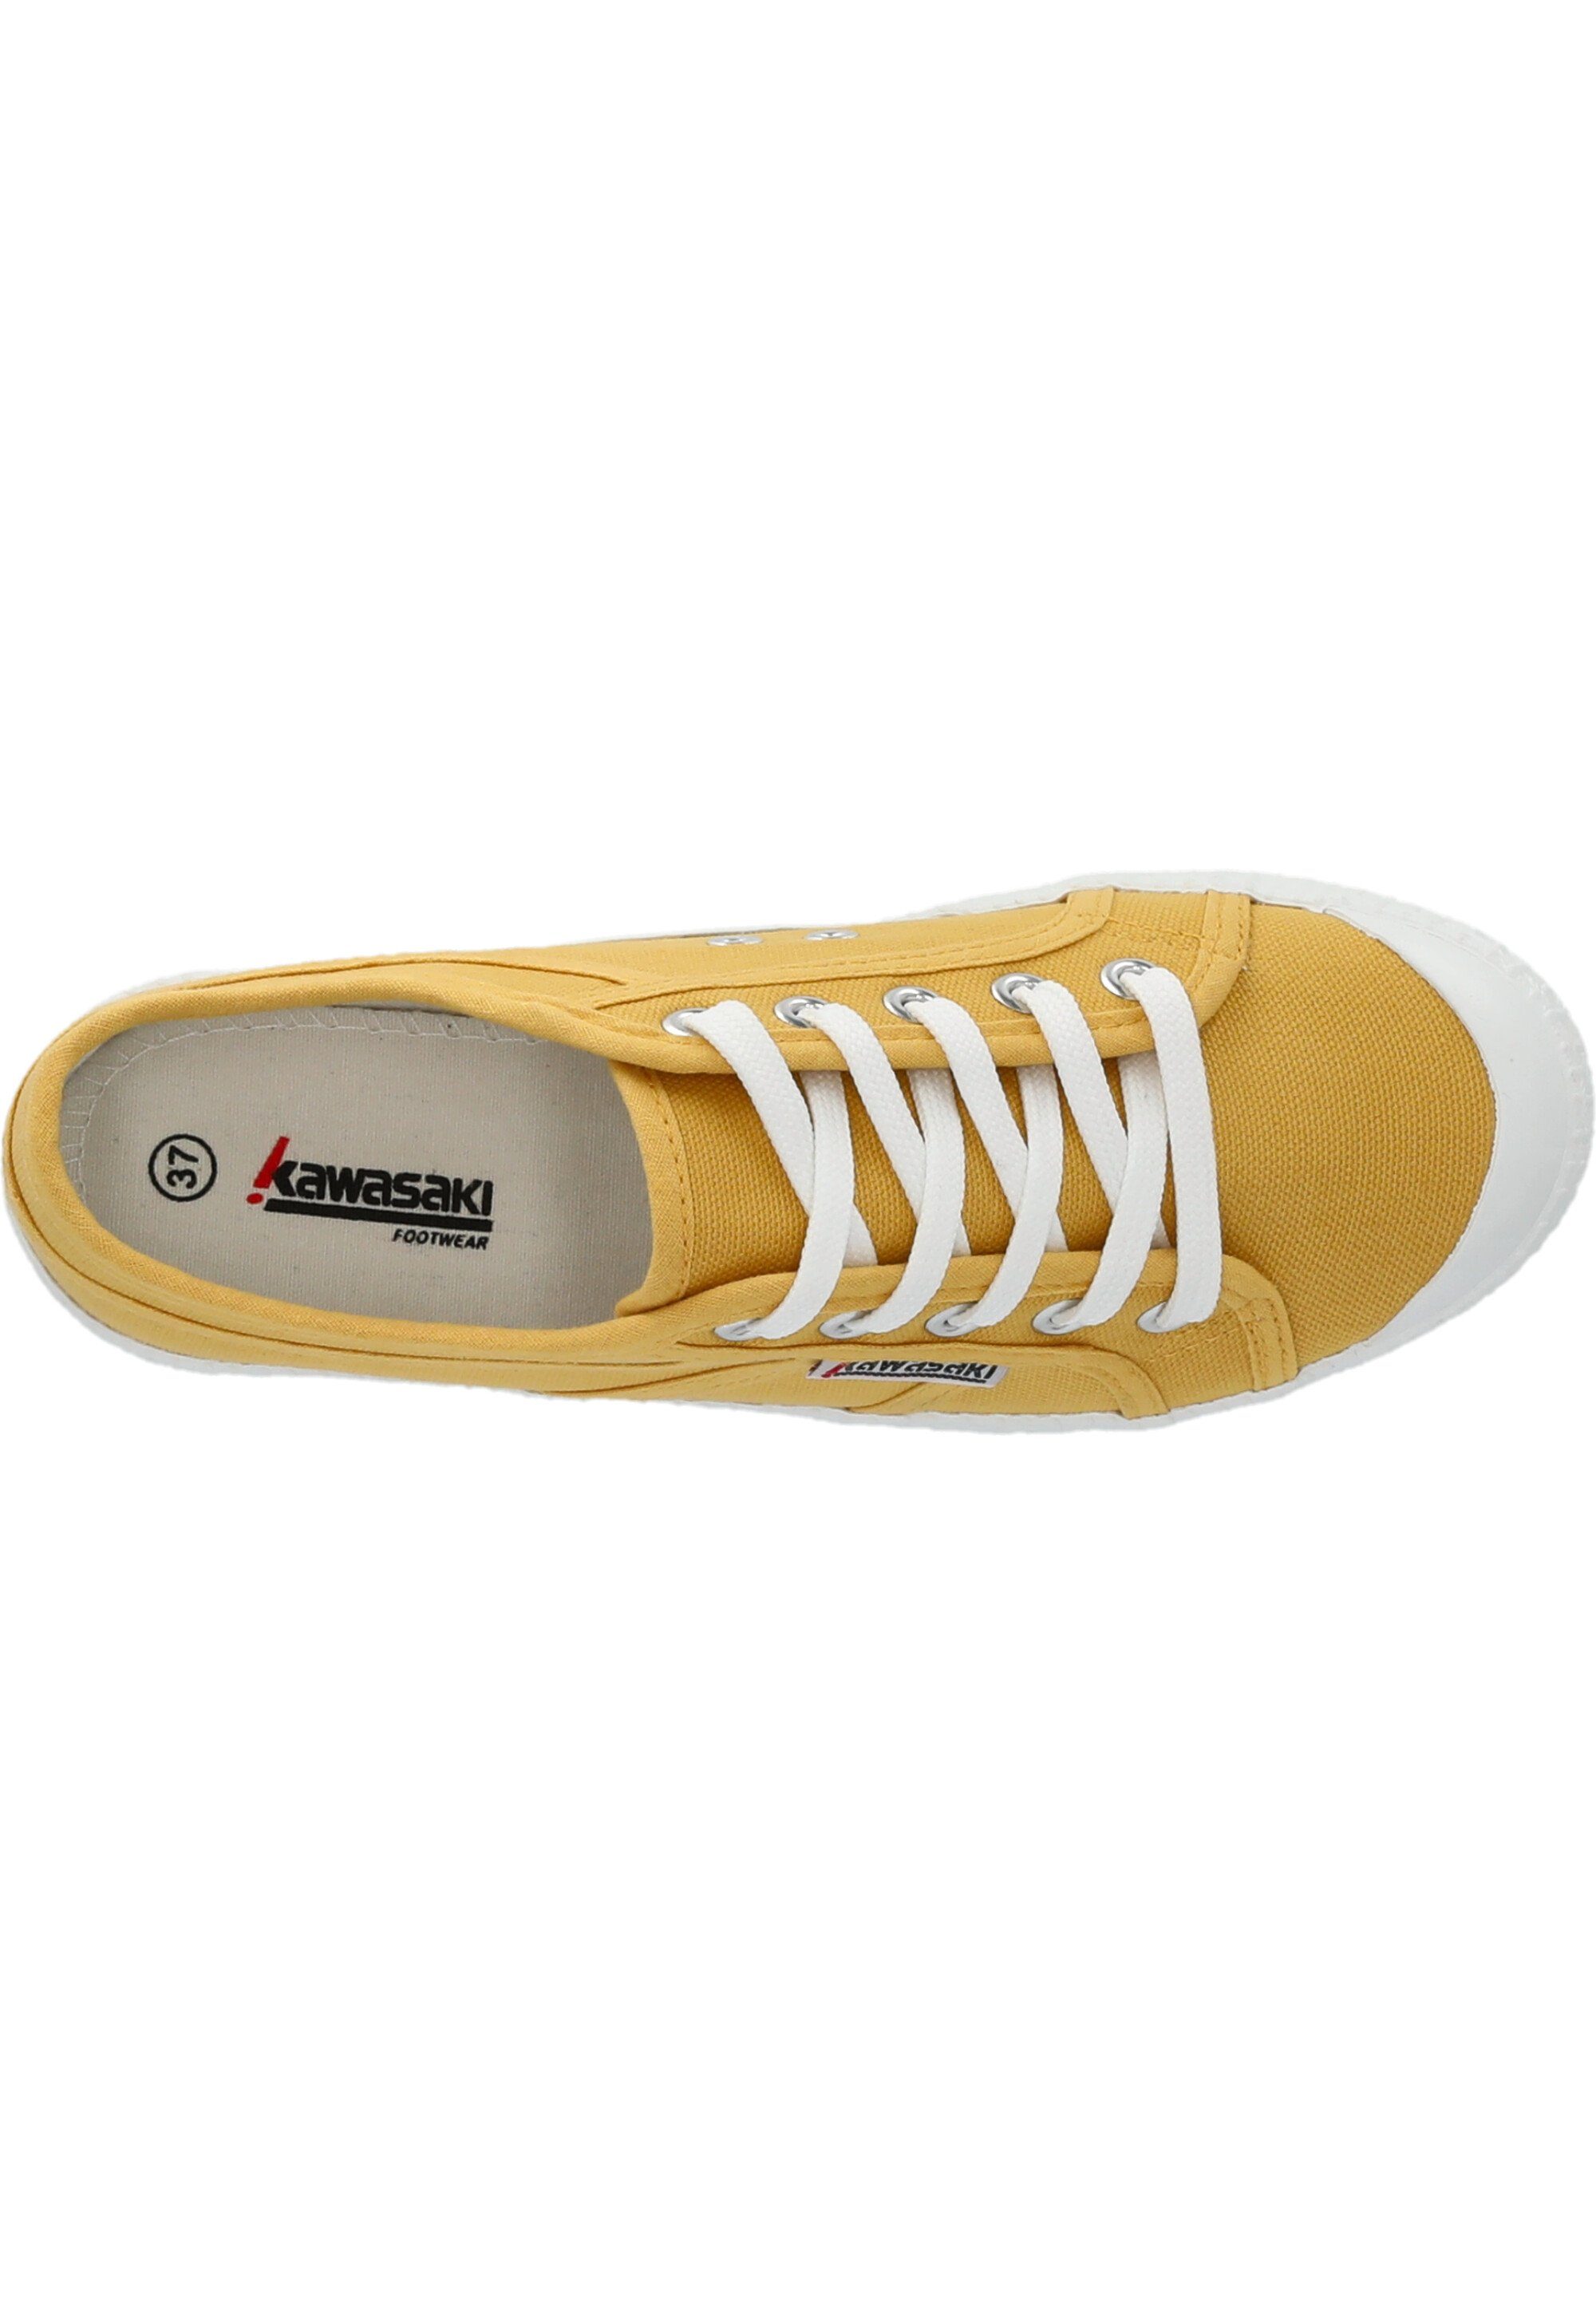 Kawasaki gelb-weiß trendy retro design Sneaker Tennis